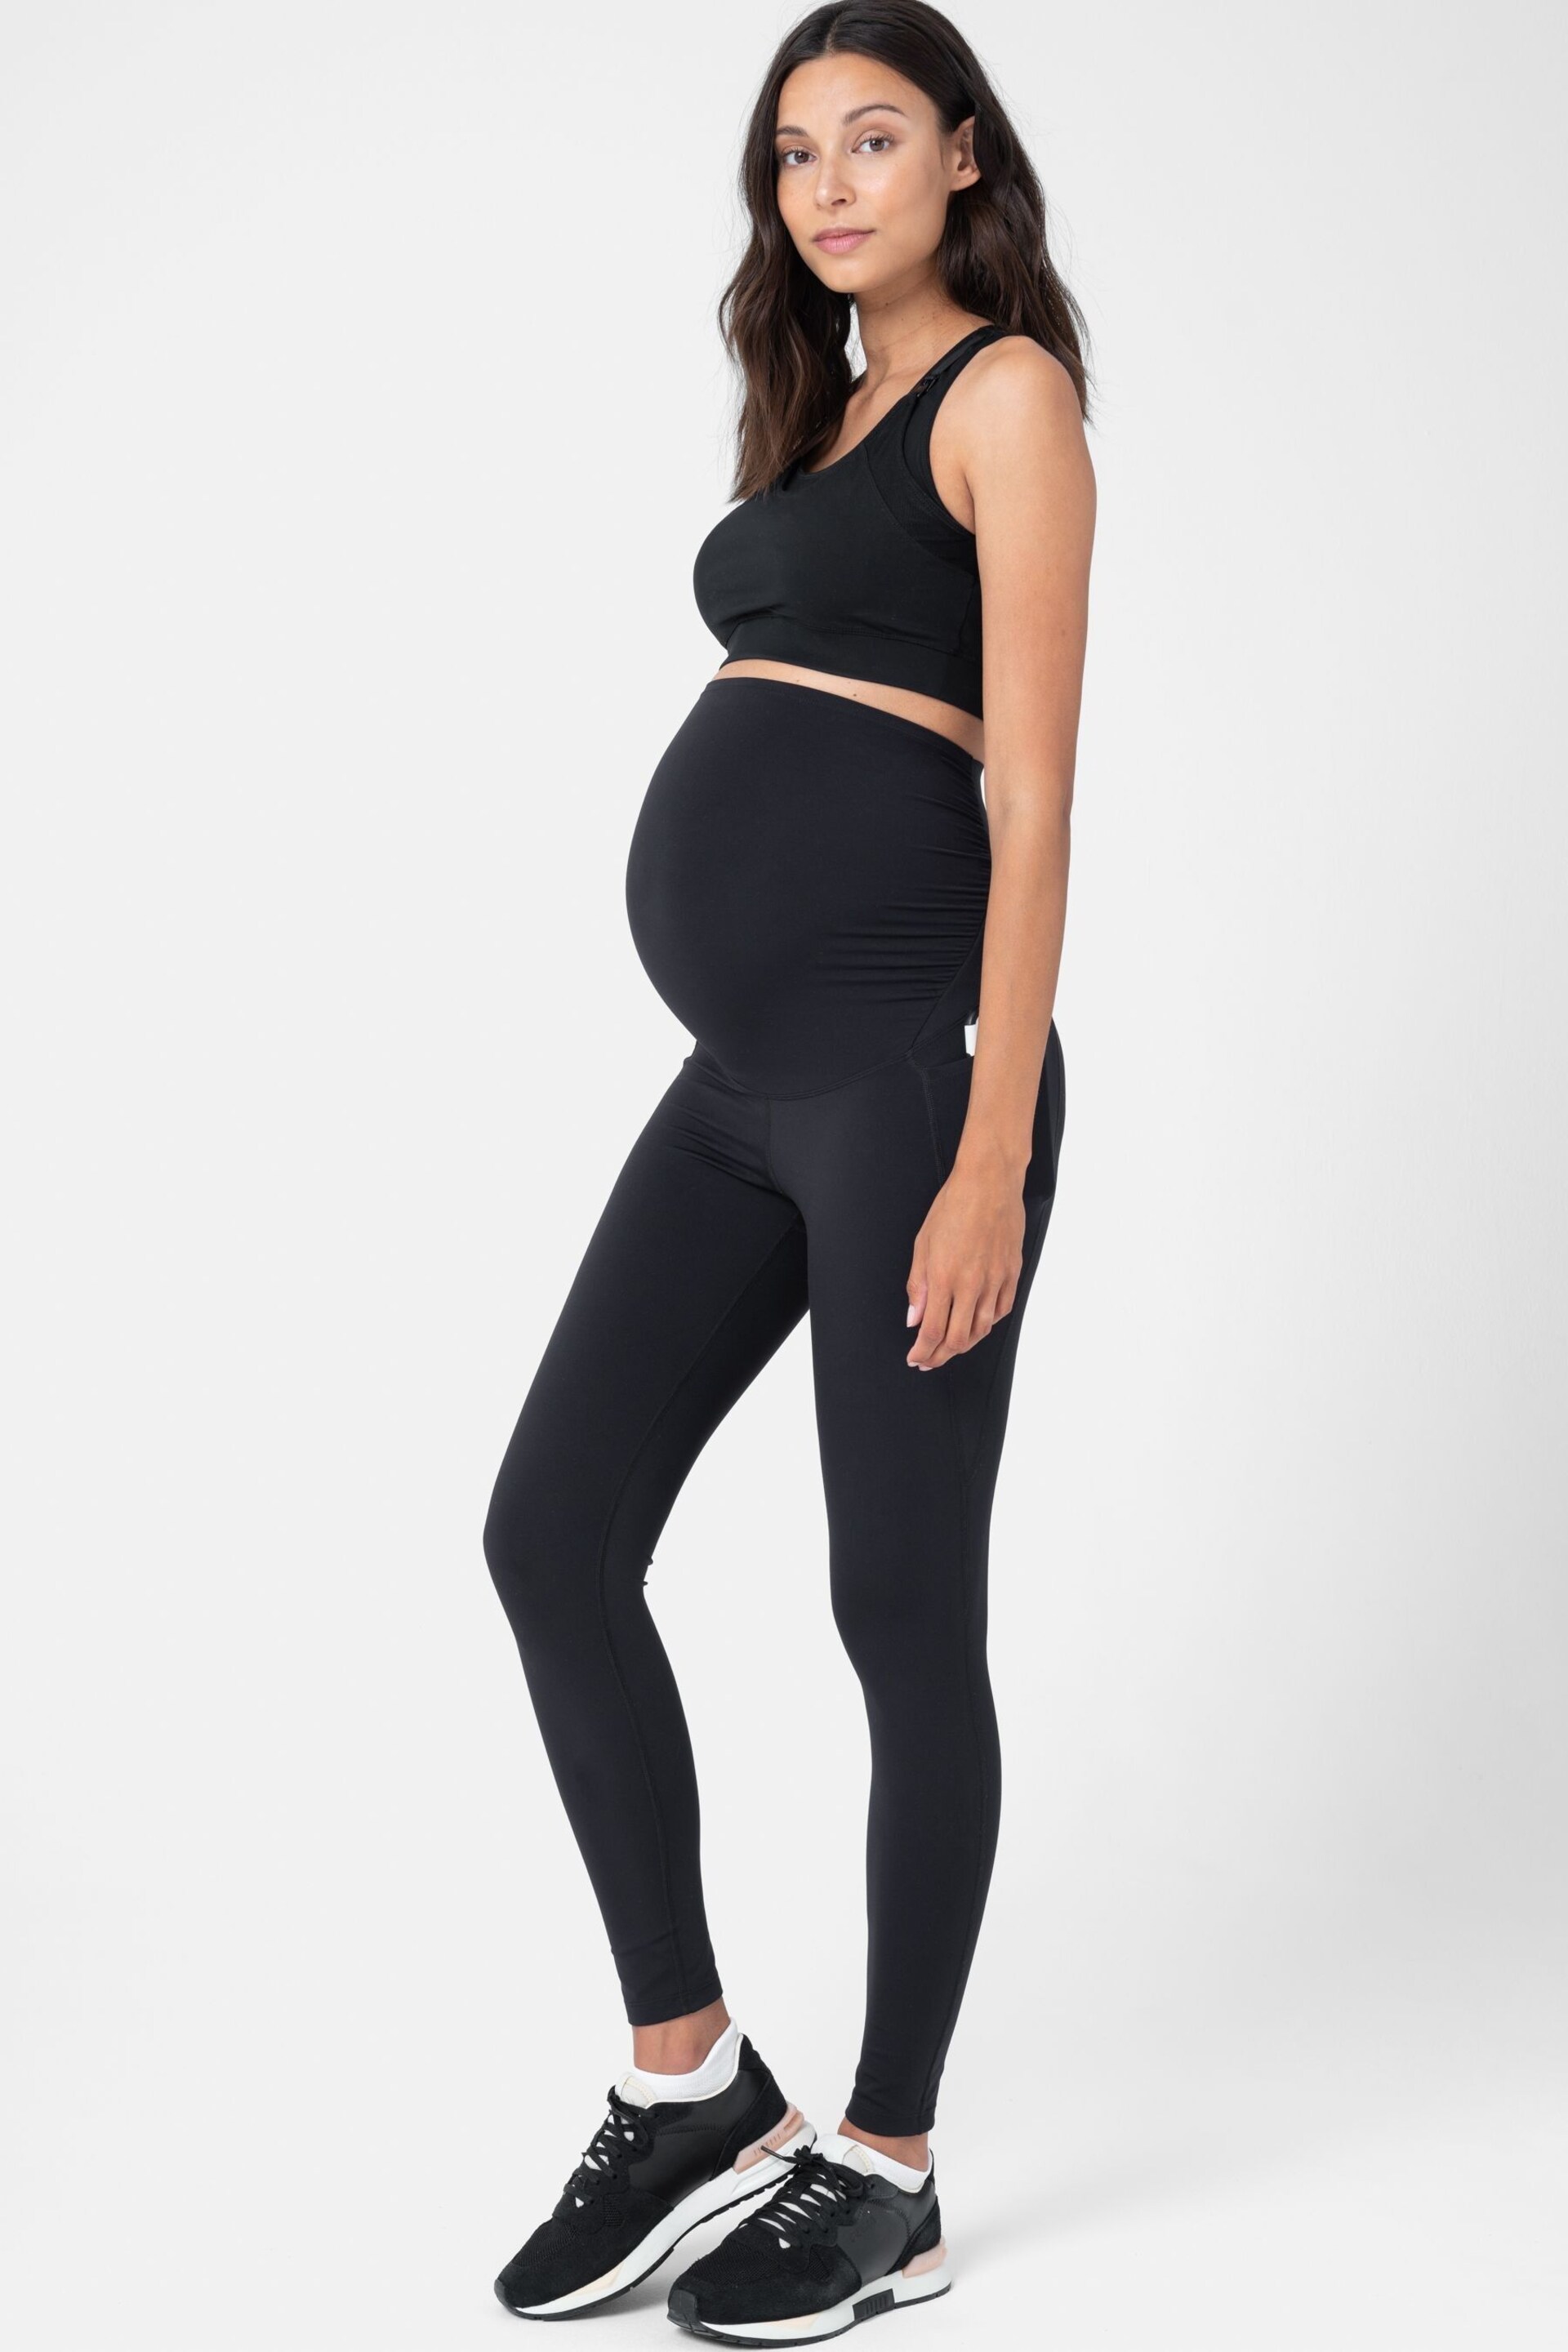 Seraphine Black Bump & Back Support Maternity Black Leggings - Image 2 of 5